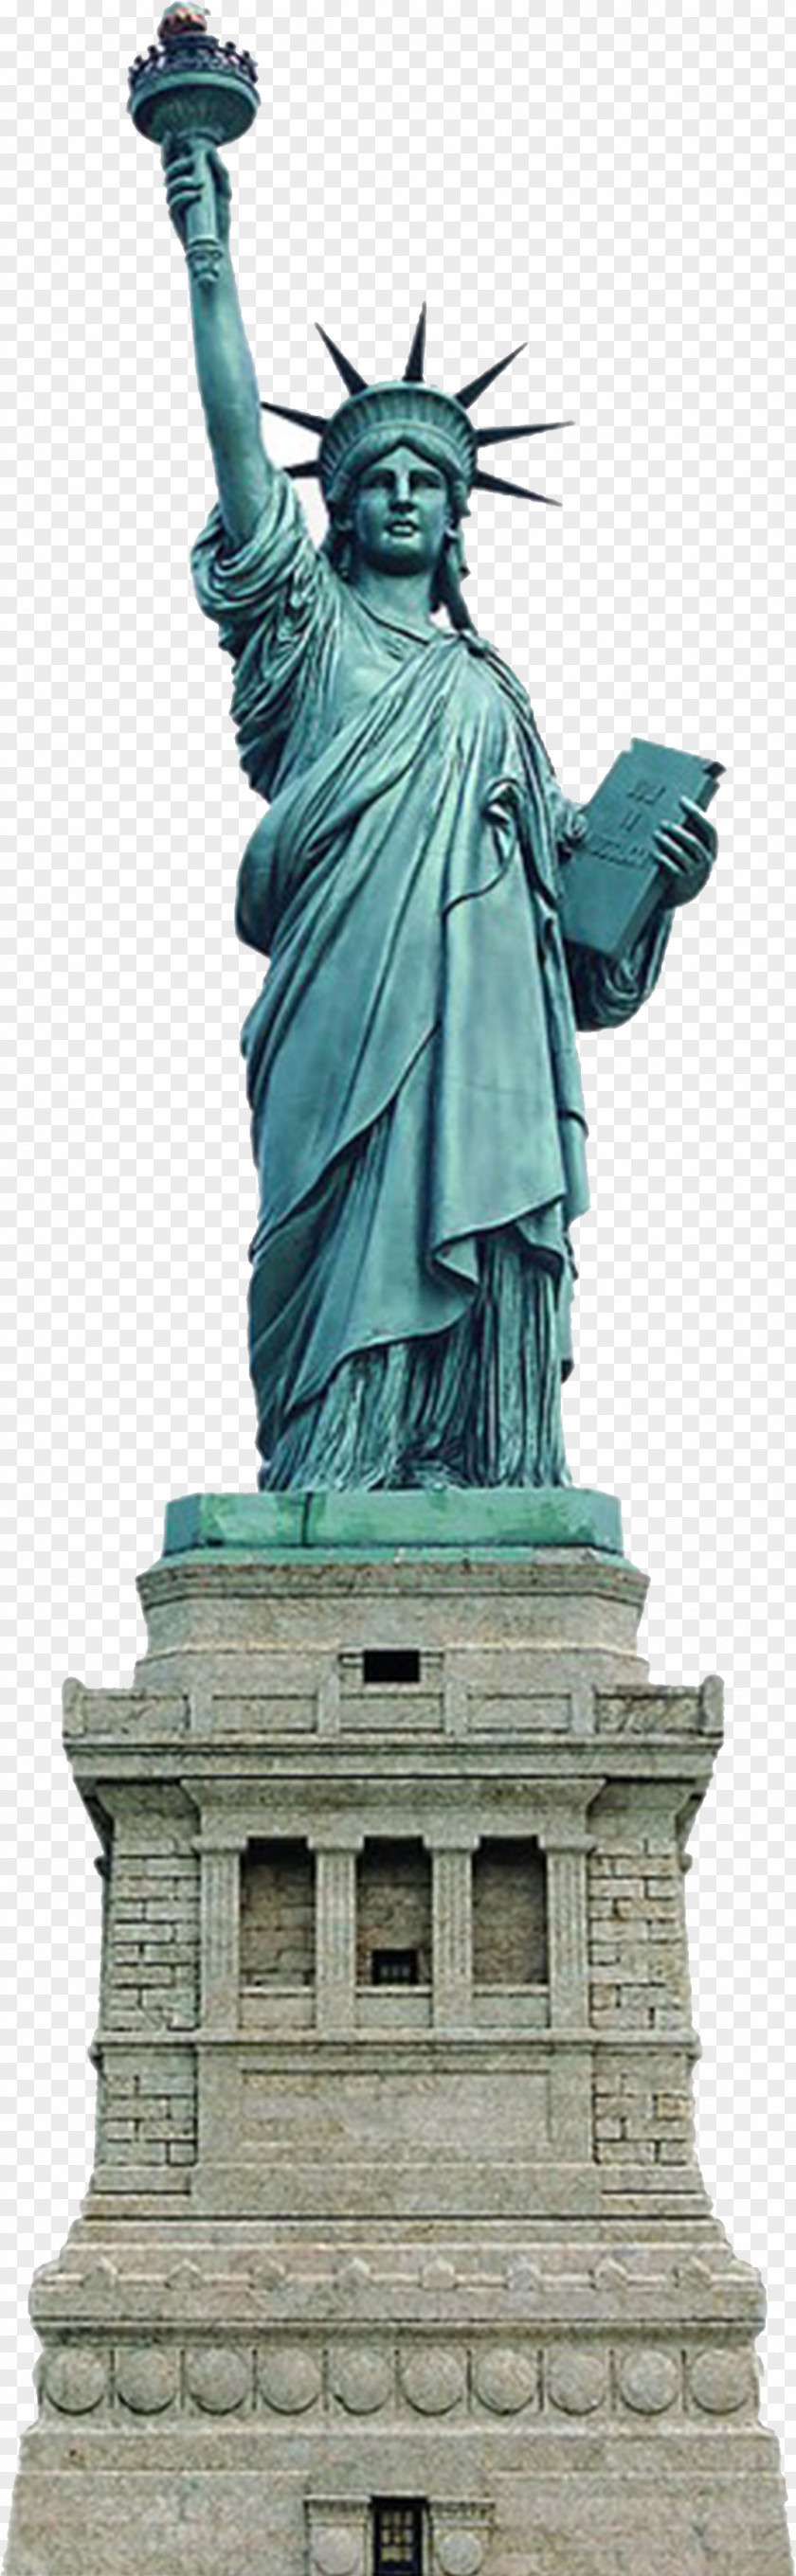 Statue Of Liberty Vintage Decoration Clip Art PNG